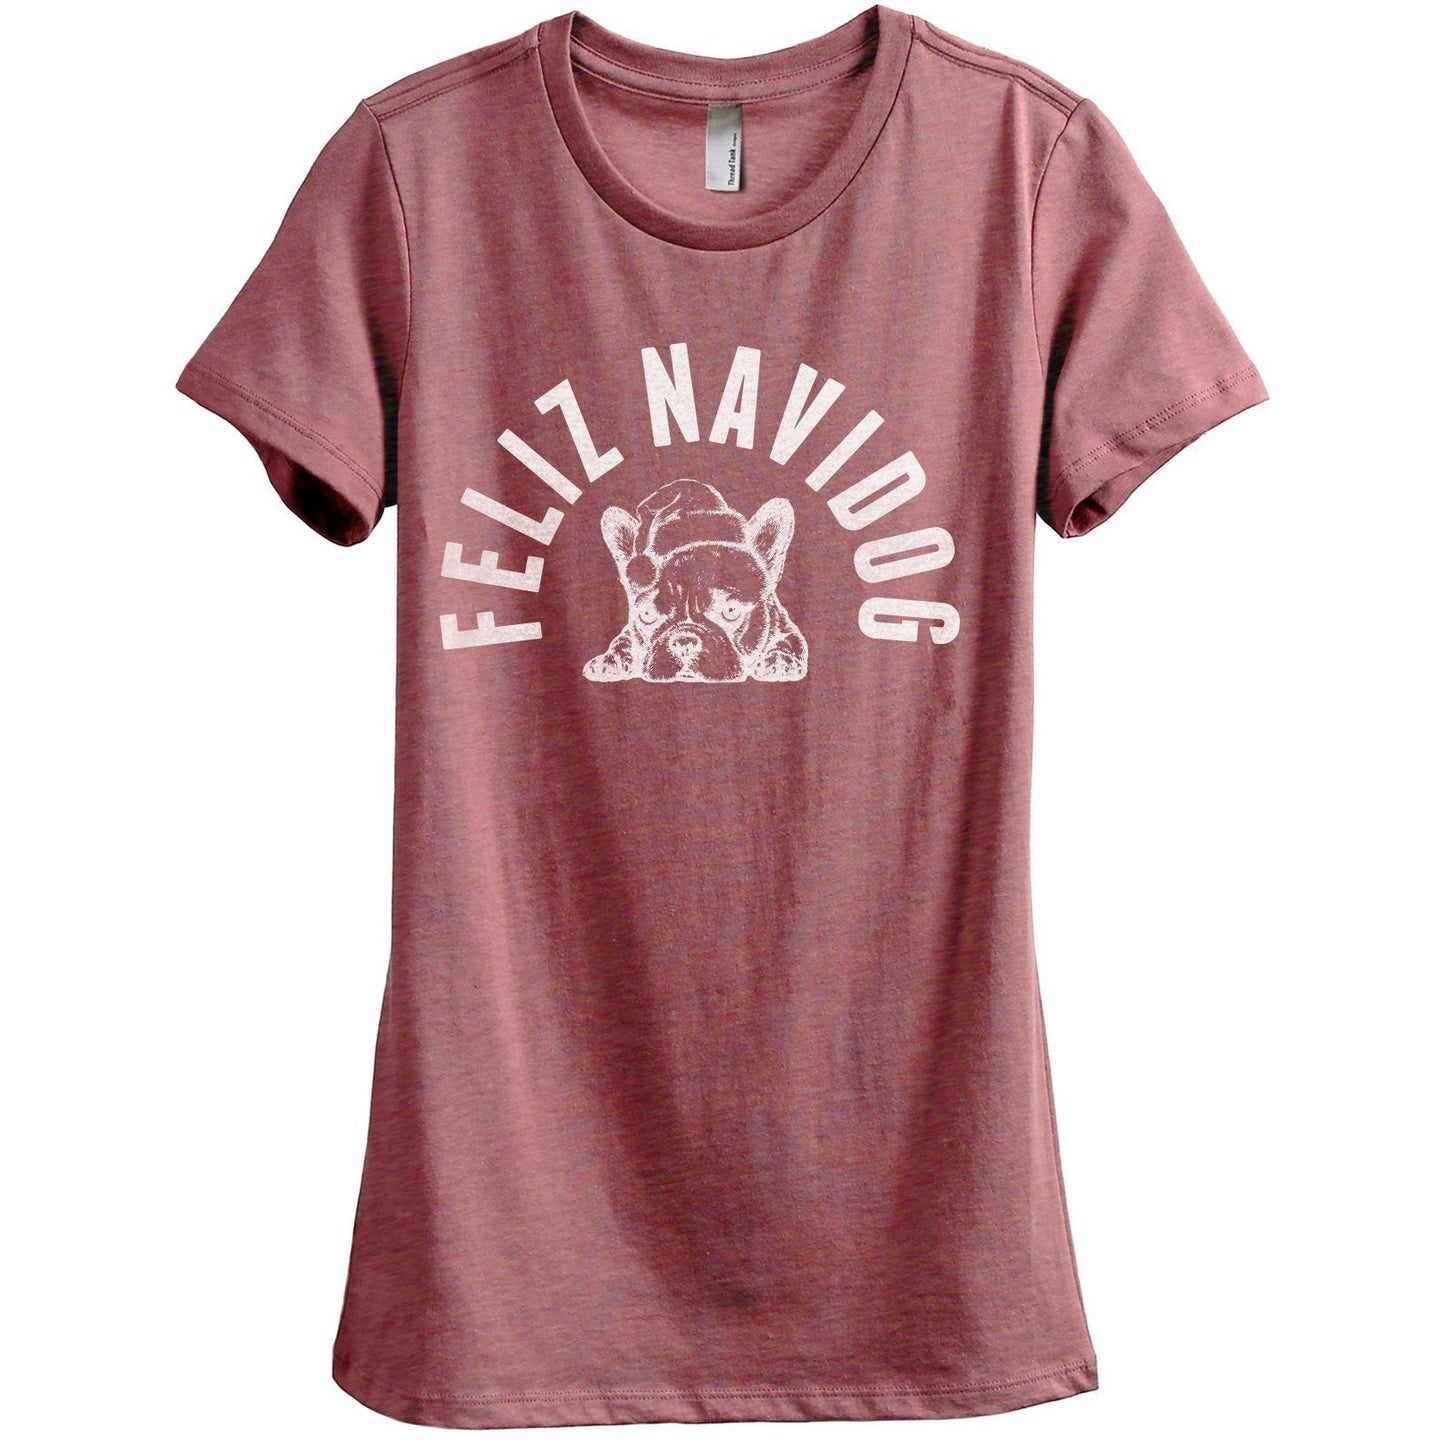 Feliz Navidog Women's Relaxed Crewneck T-Shirt Top Tee Heather Rouge